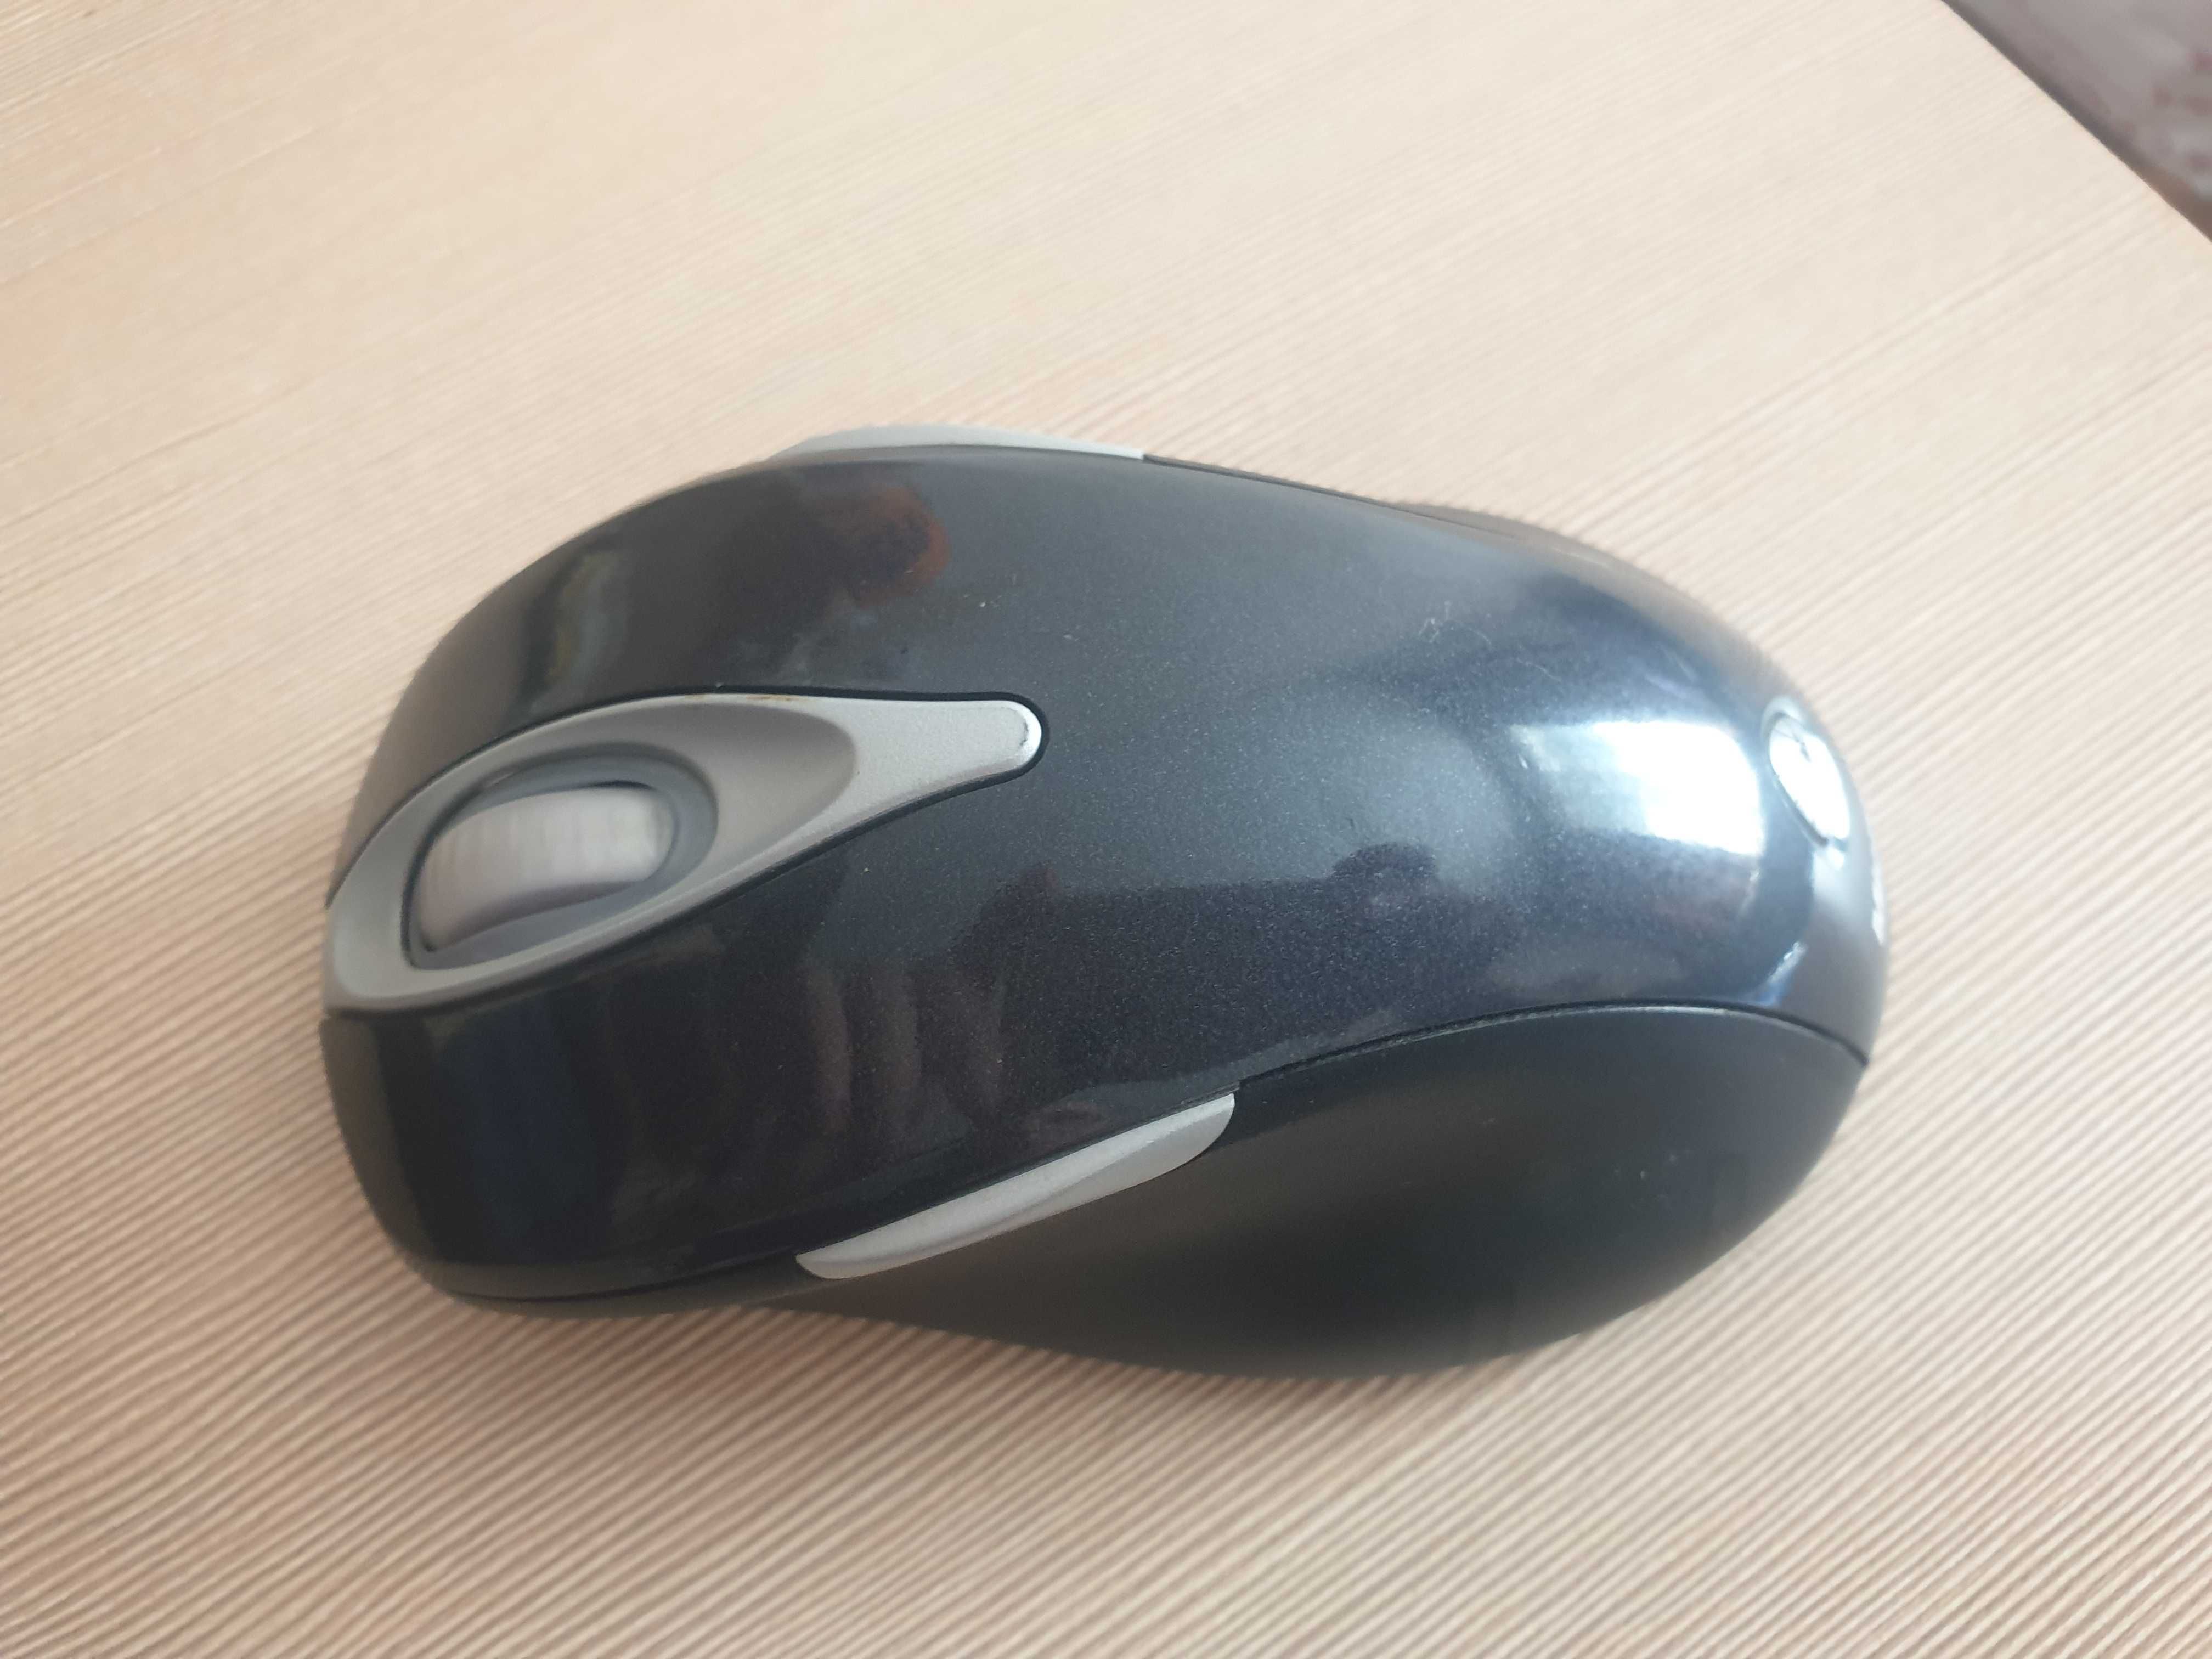 Мышка Microsoft Wireless Laser Mouse 5000